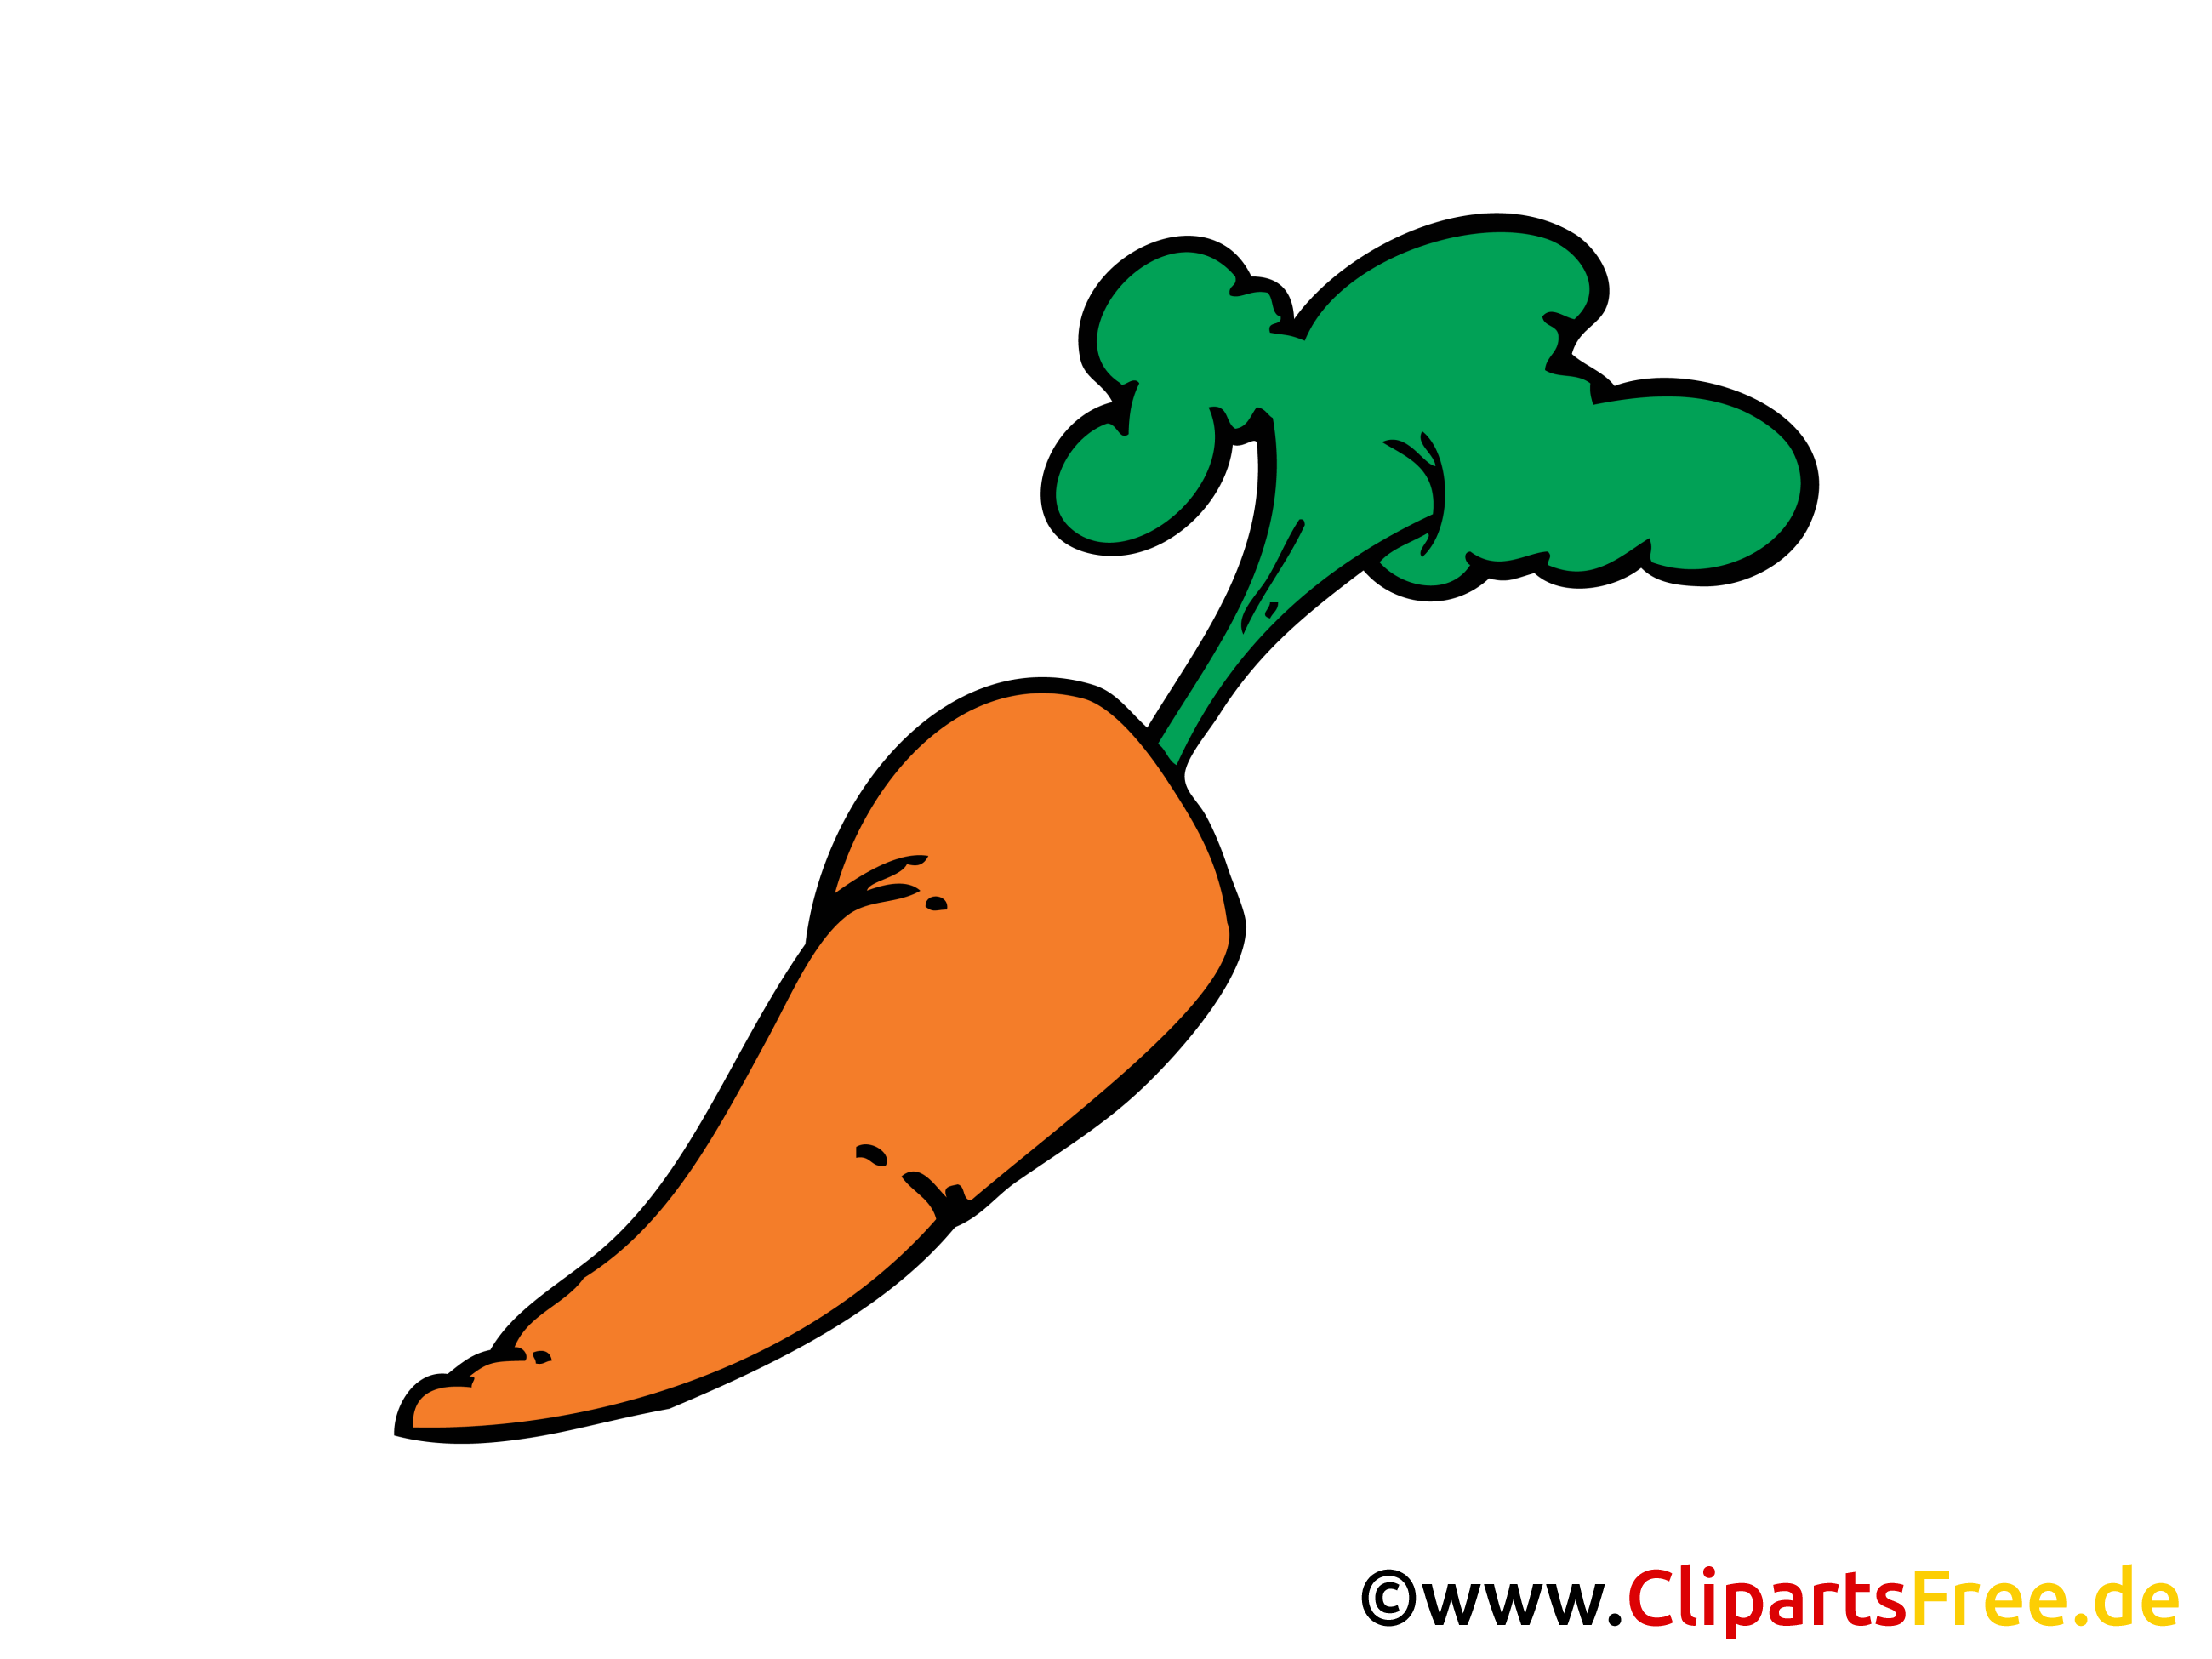 clipart carrots free - photo #29